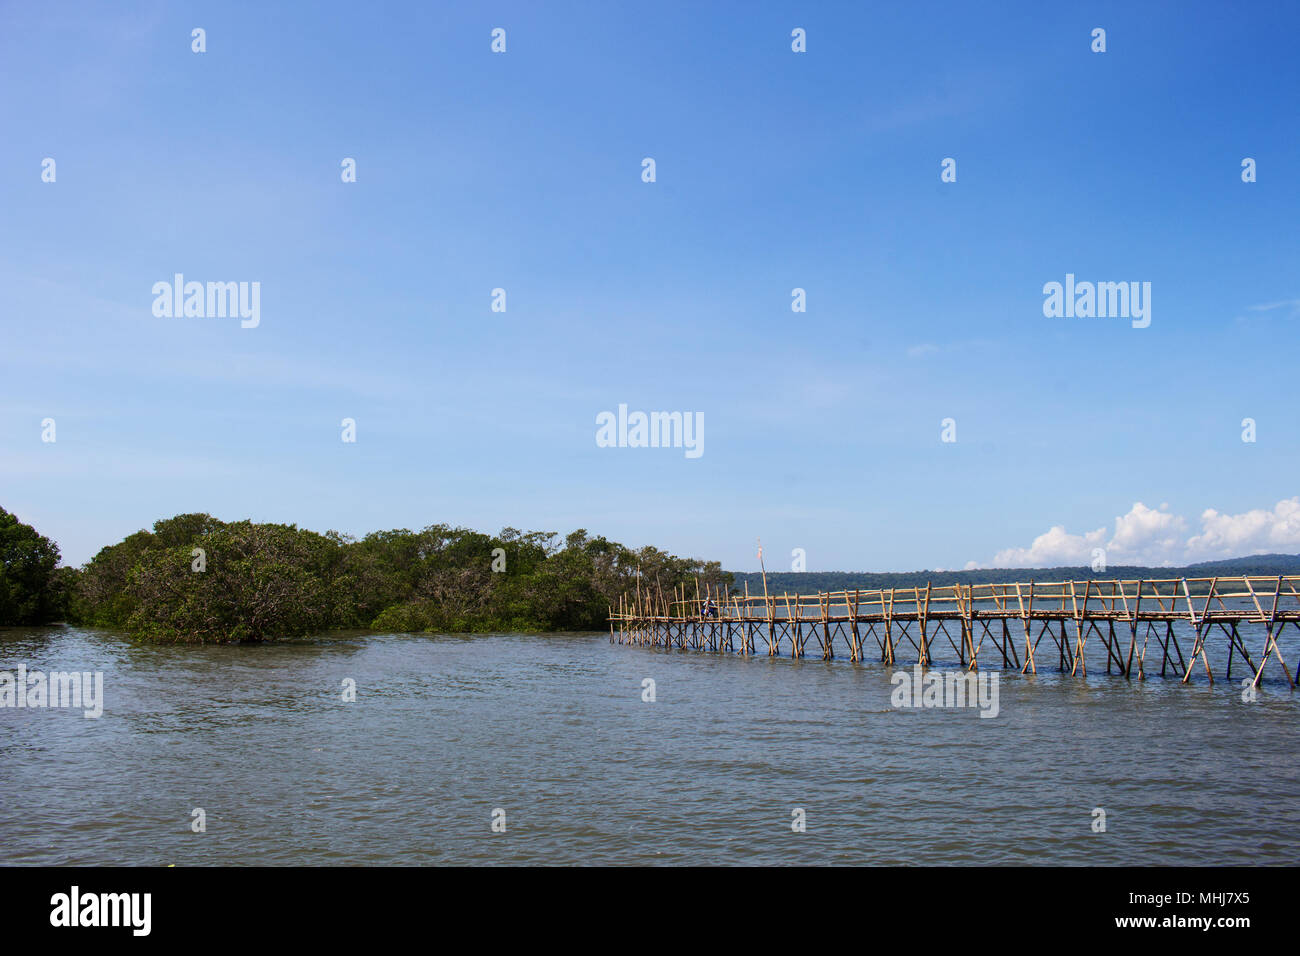 Bamboo Bridge go in the Mangrove Trees in Day of Blue Sky Stock Photo